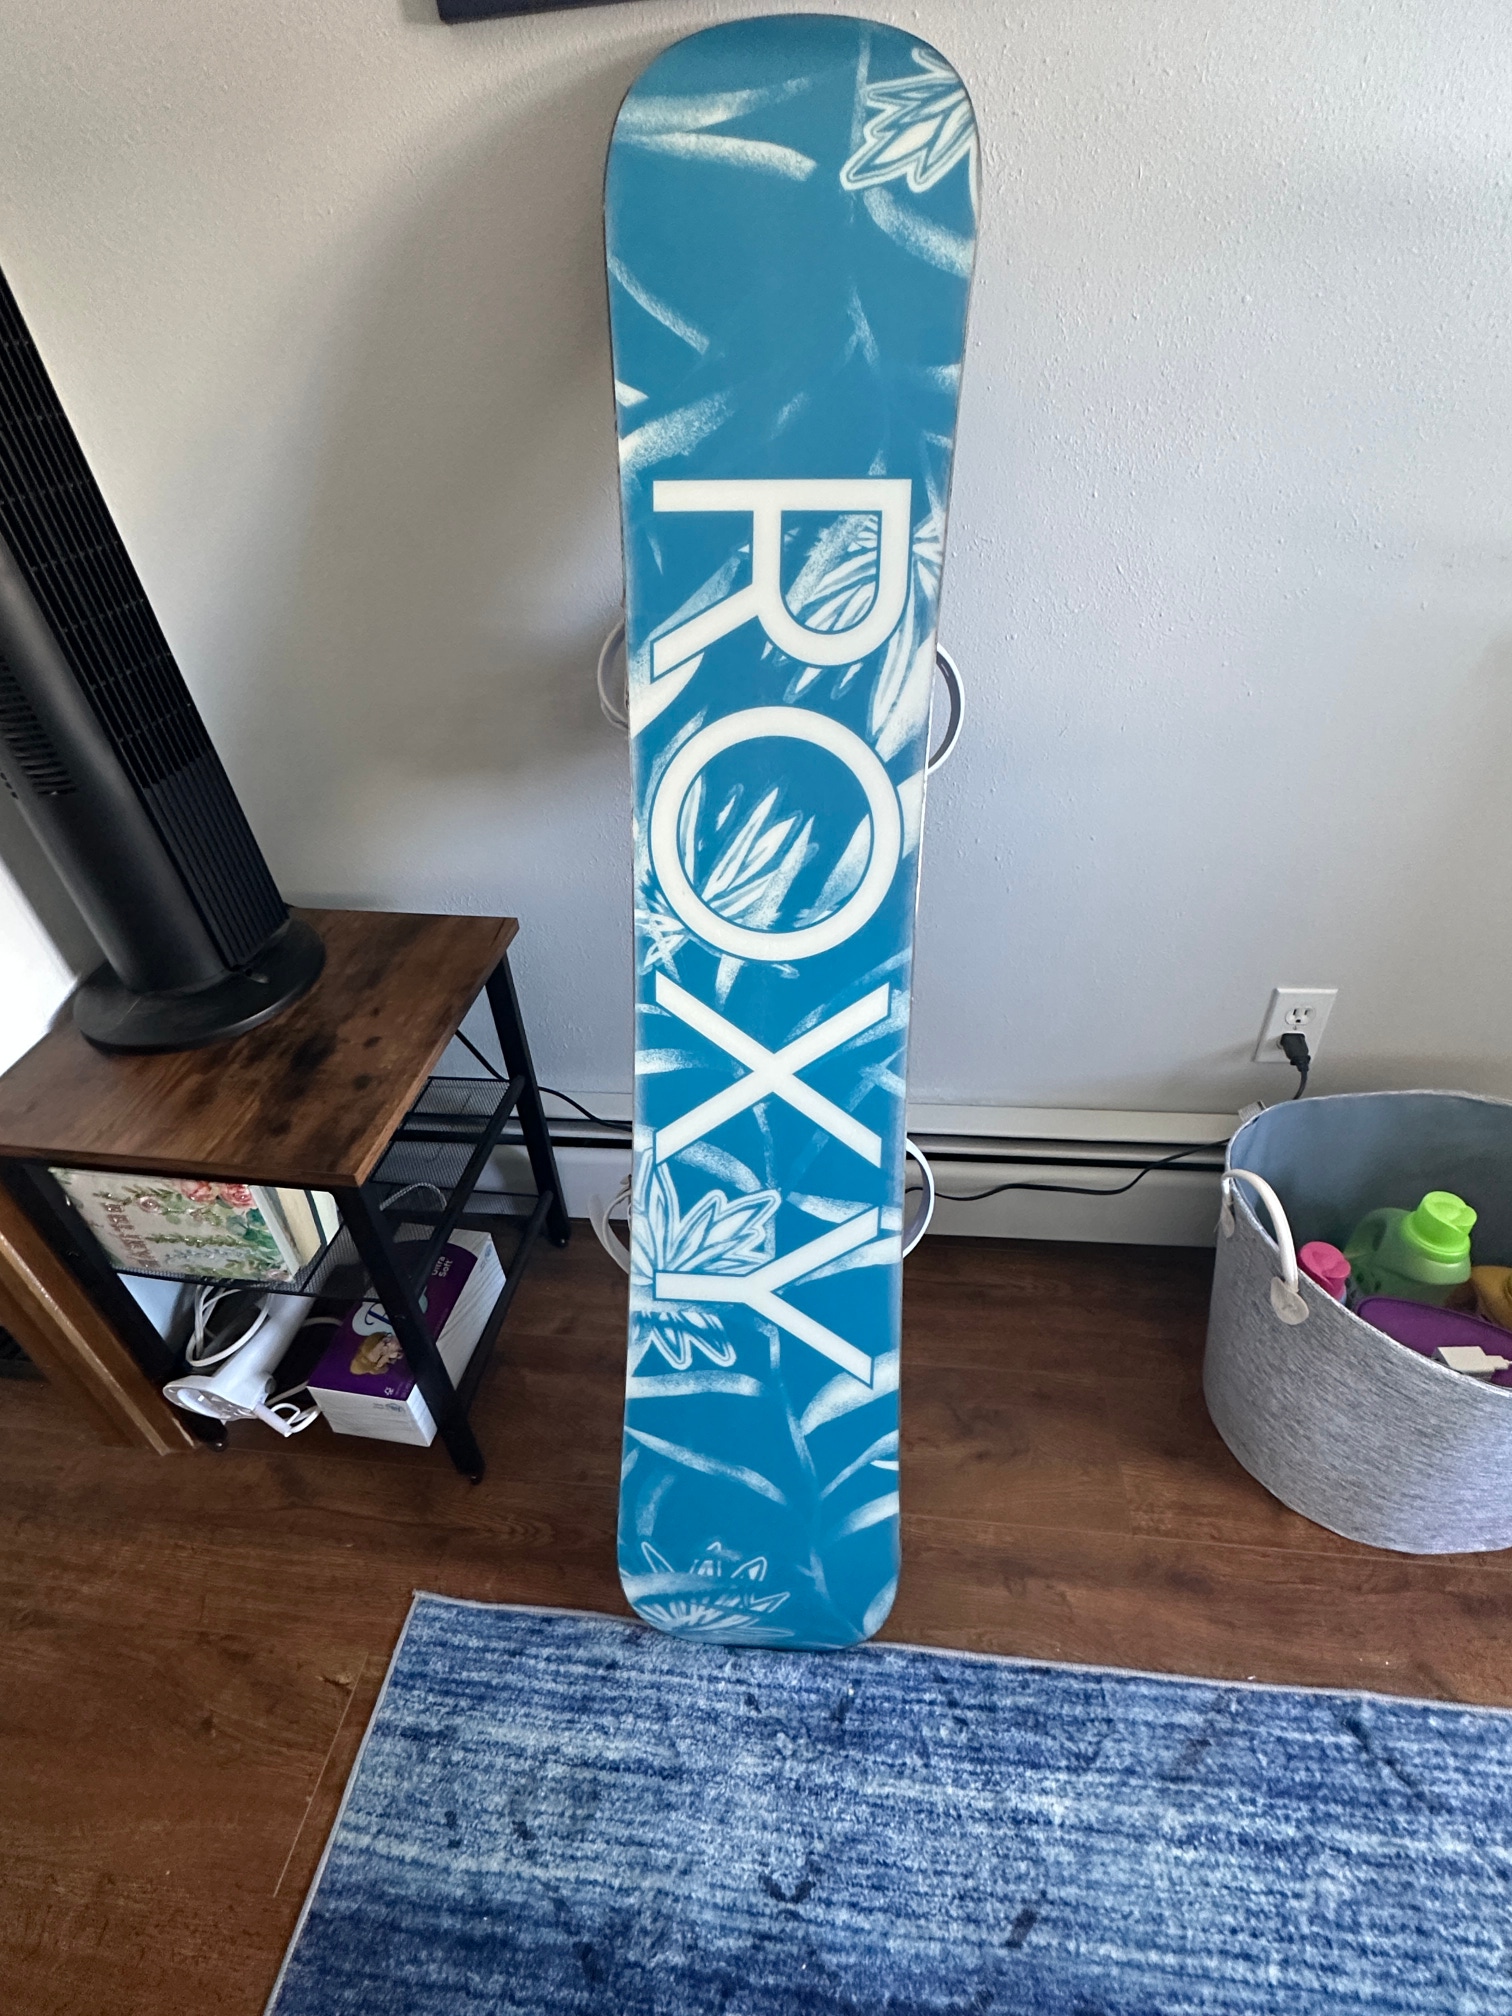 Used Women's Roxy Snowboard Freeride With Bindings Medium Flex Directional Twin